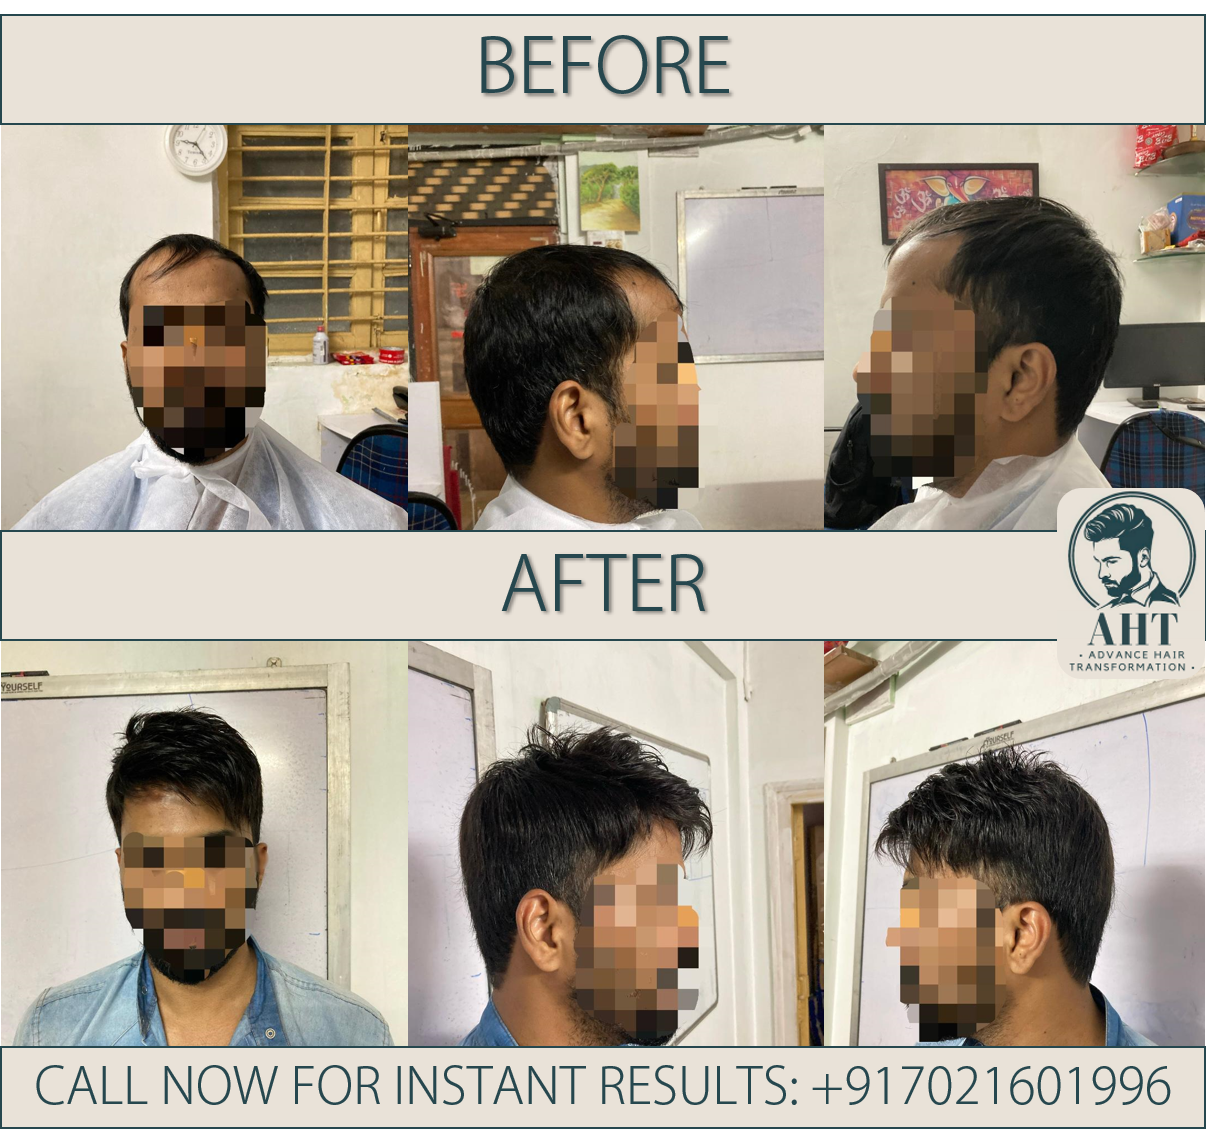 Nirmal Kumar Singh  Accounts  Admin  Advanced Hair Studio India   LinkedIn